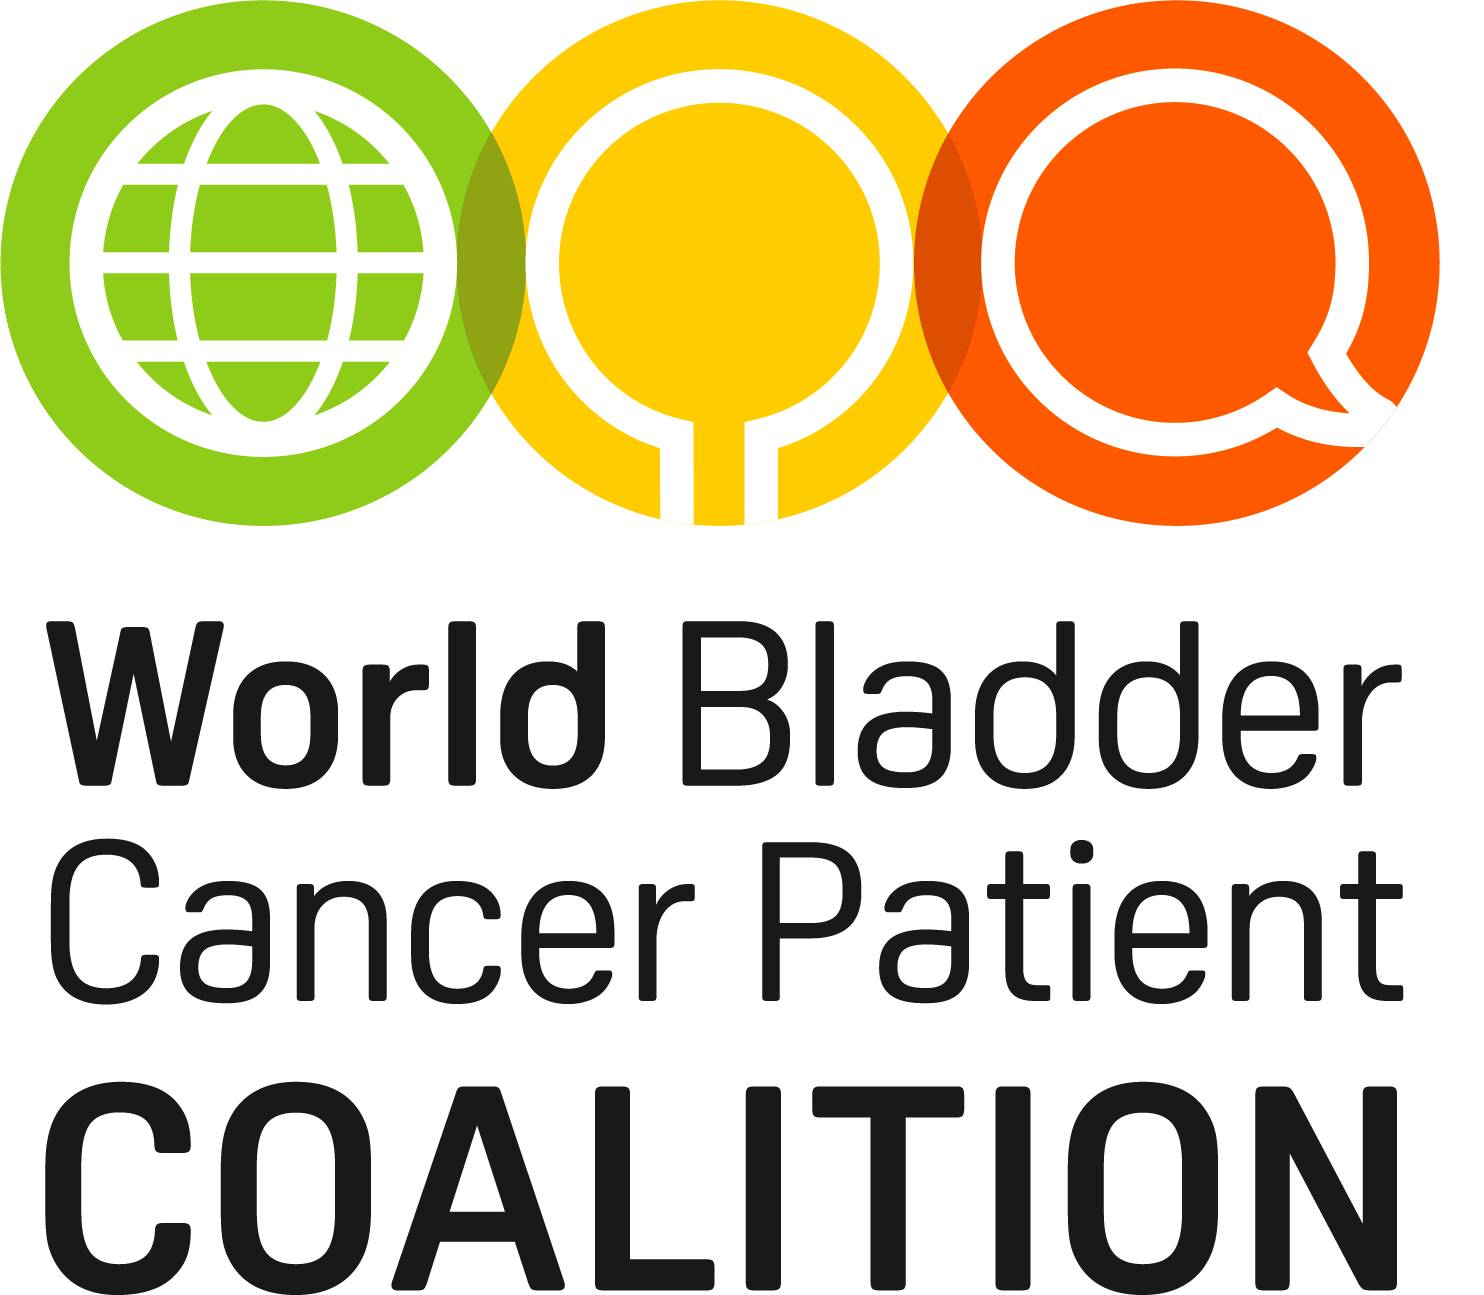 World Bladder Cancer Patient Coalition Logo